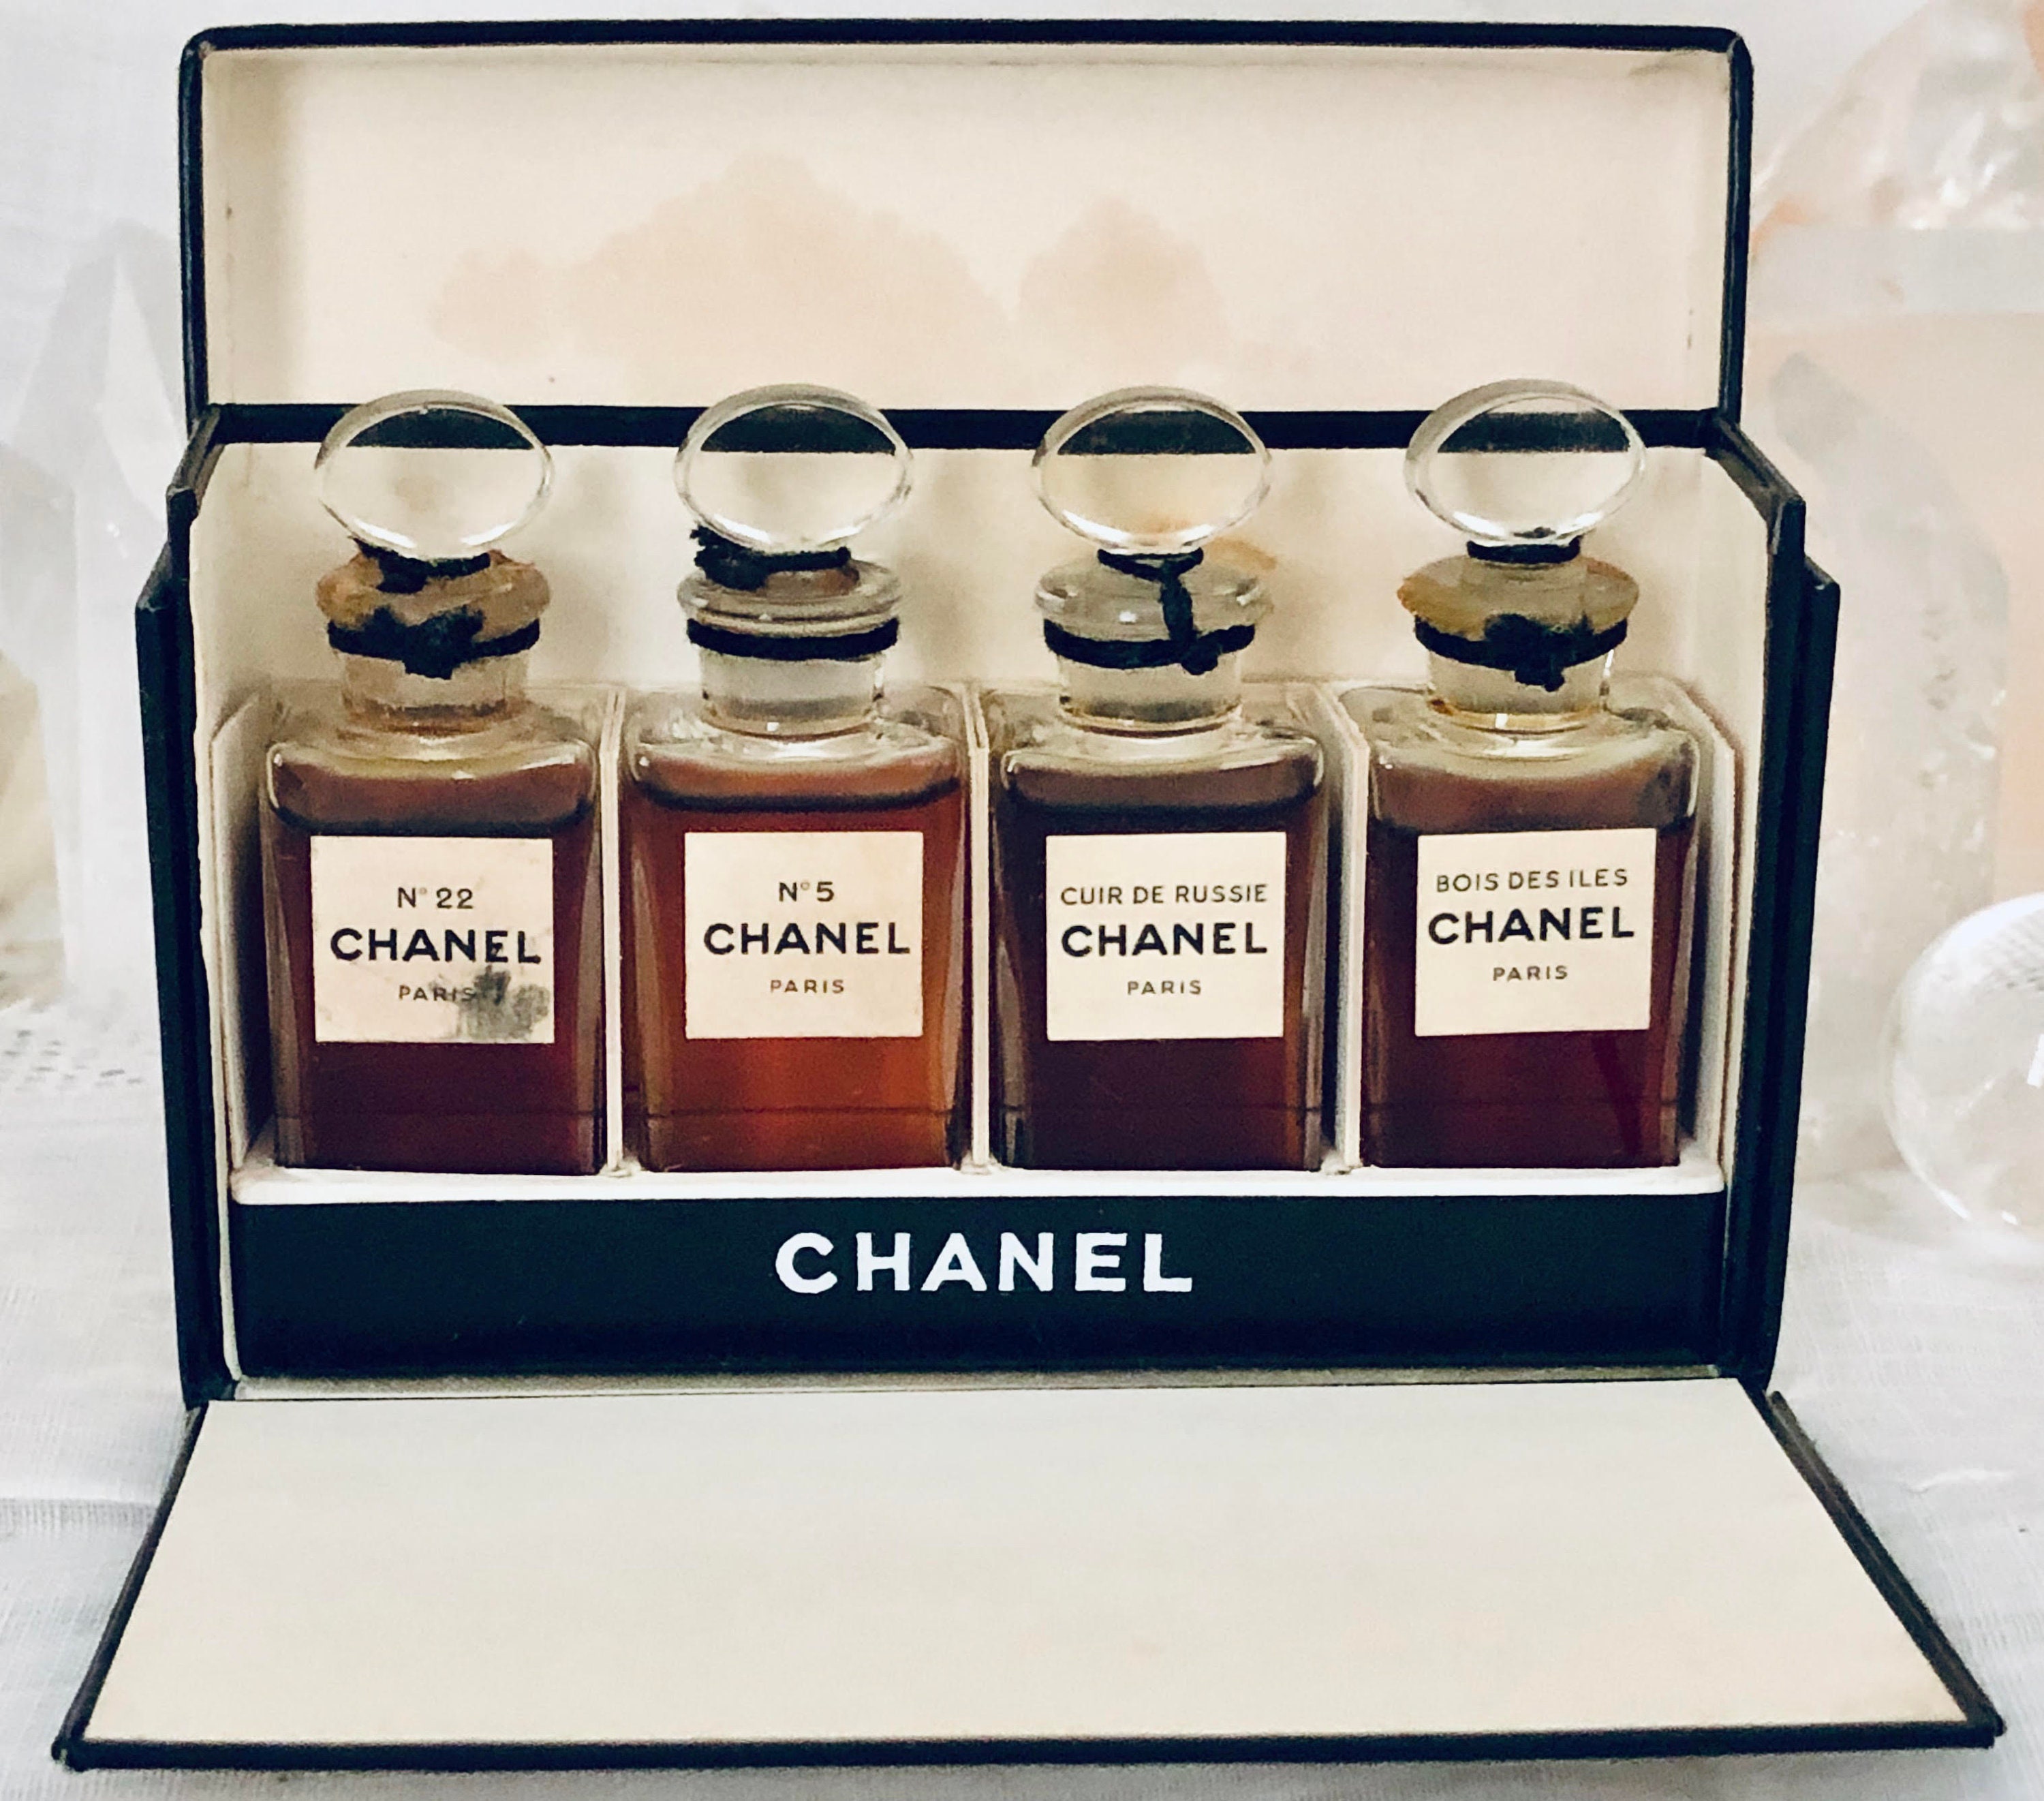 Chanel No 22 Perfume - Etsy